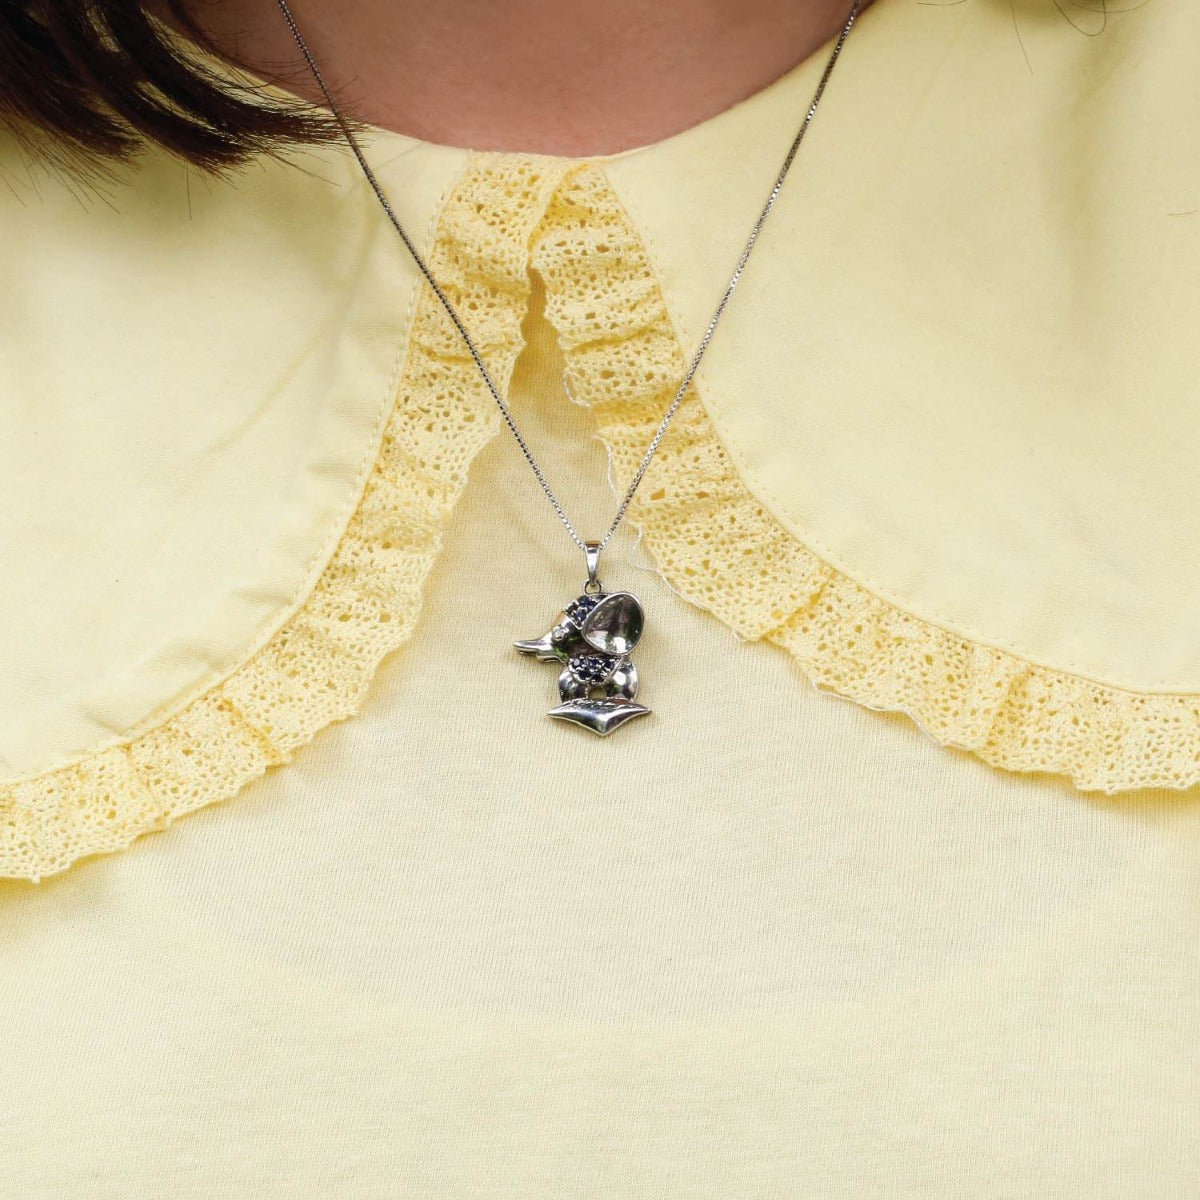 elephant pendant, sapphire pendant, silver pendant, sterling silver pendant, sapphire jewelry